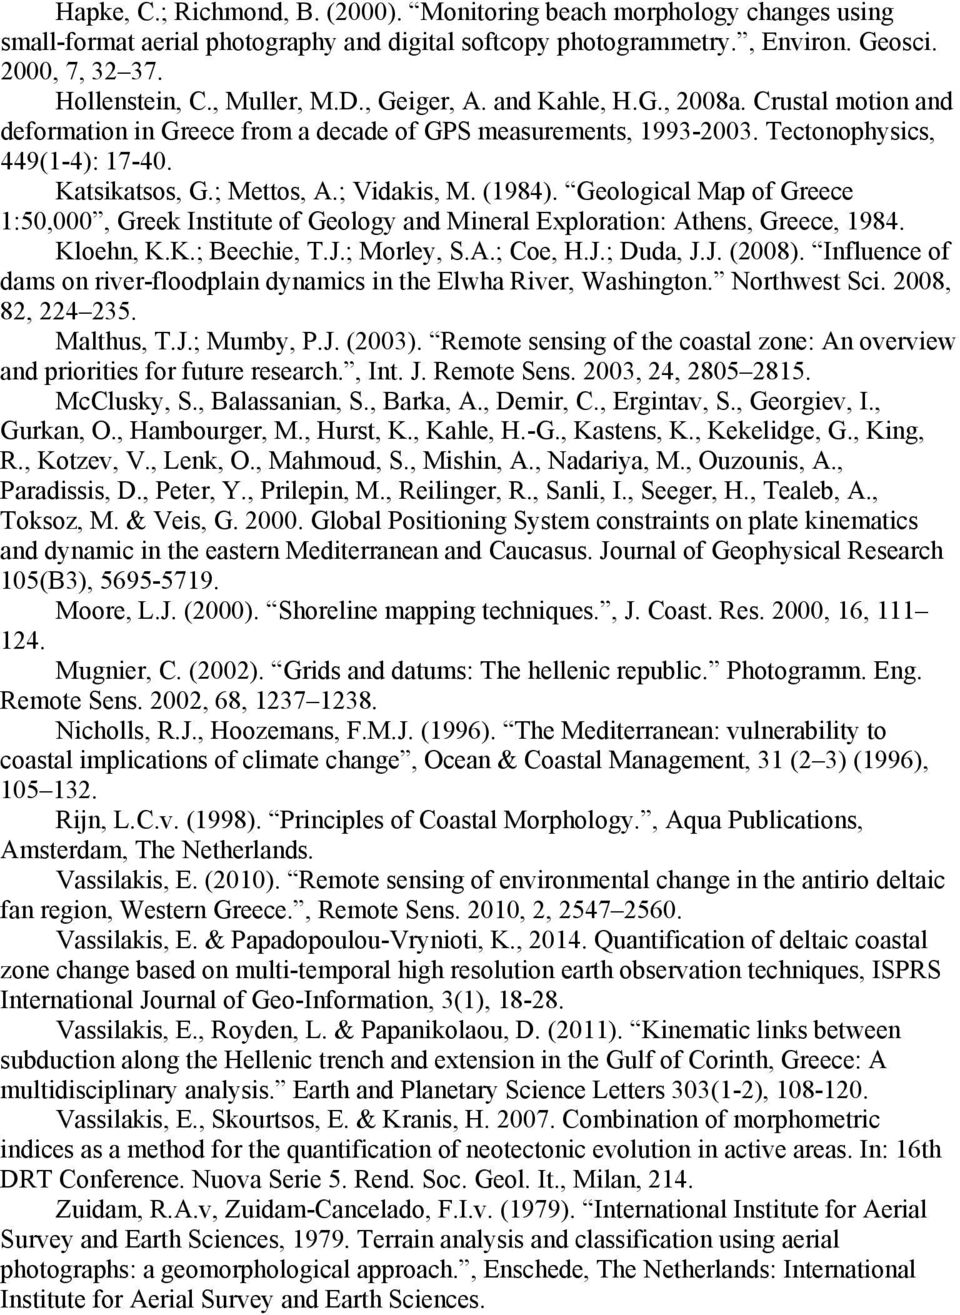 ; Vidakis, M. (1984). Geological Map of Greece 1:50,000, Greek Institute of Geology and Mineral Exploration: Athens, Greece, 1984. Kloehn, K.K.; Beechie, T.J.; Morley, S.A.; Coe, H.J.; Duda, J.J. (2008).